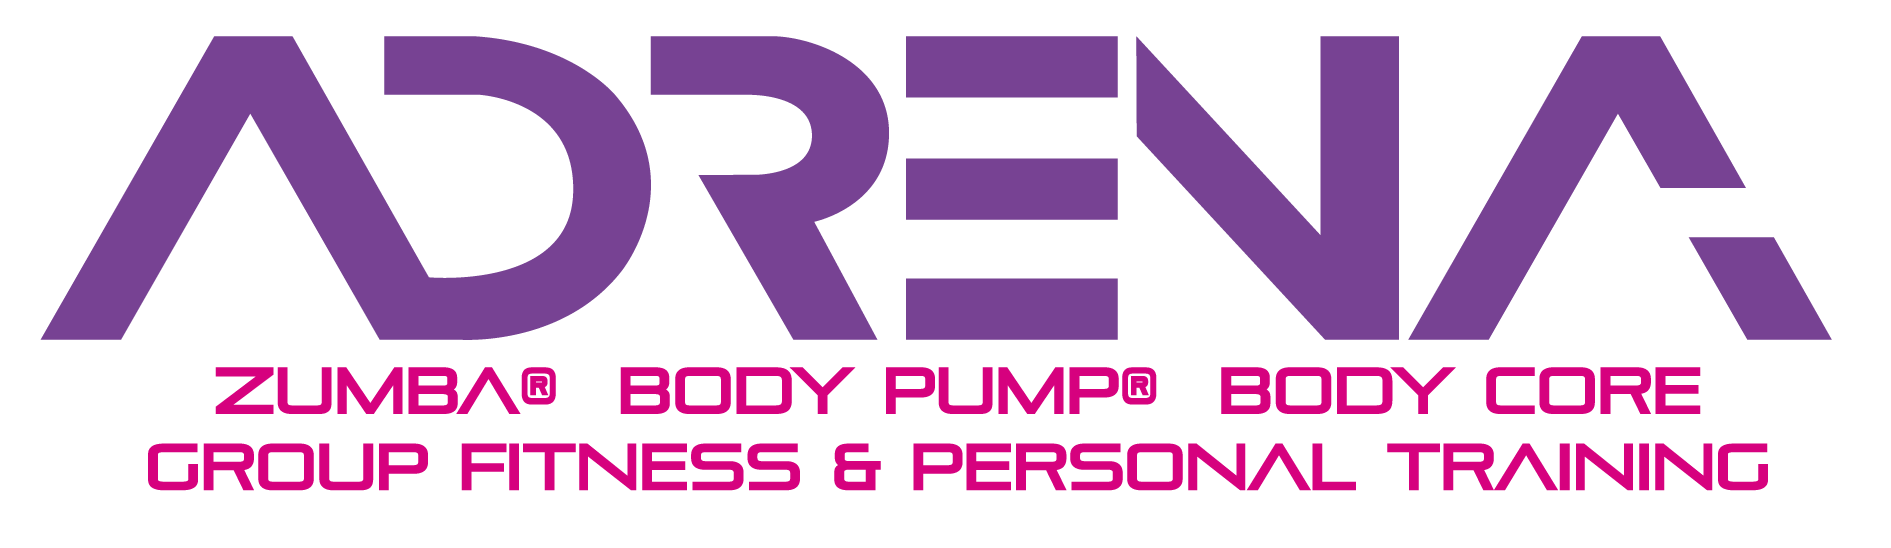 Adrena Logo